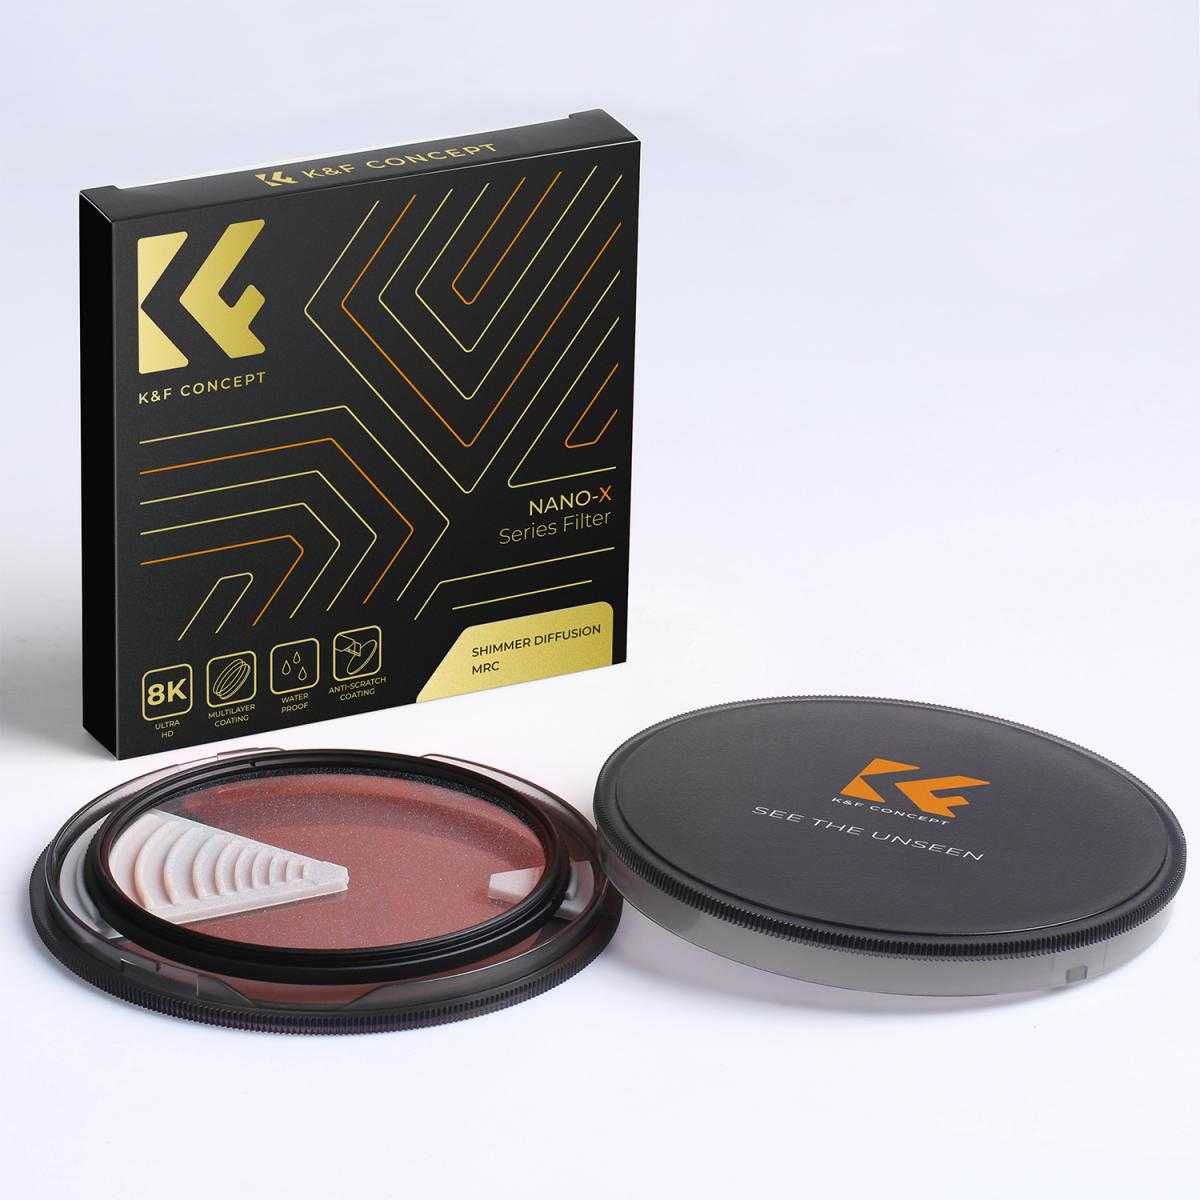 K&F Concept Nano X Shimmer Diffusion 1 филтър